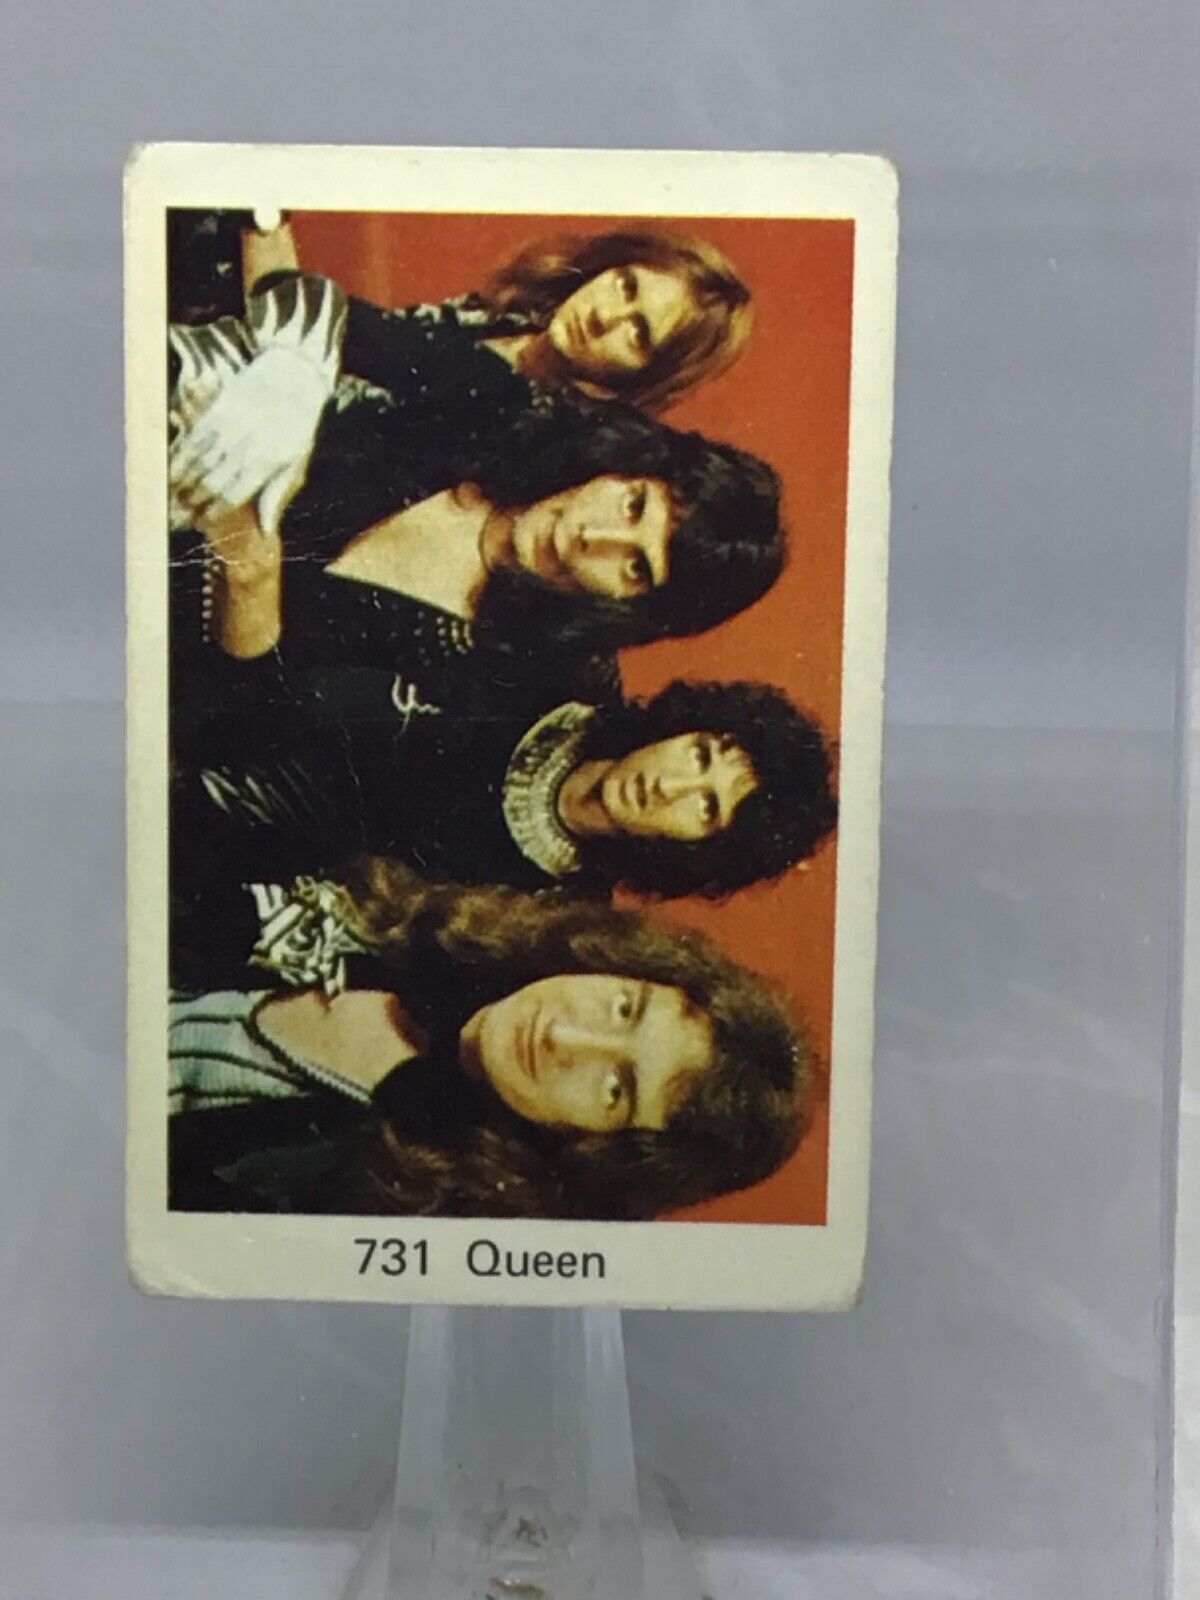 1974-81 Swedish Samlarsaker #731 Queen - Freddie Mercury